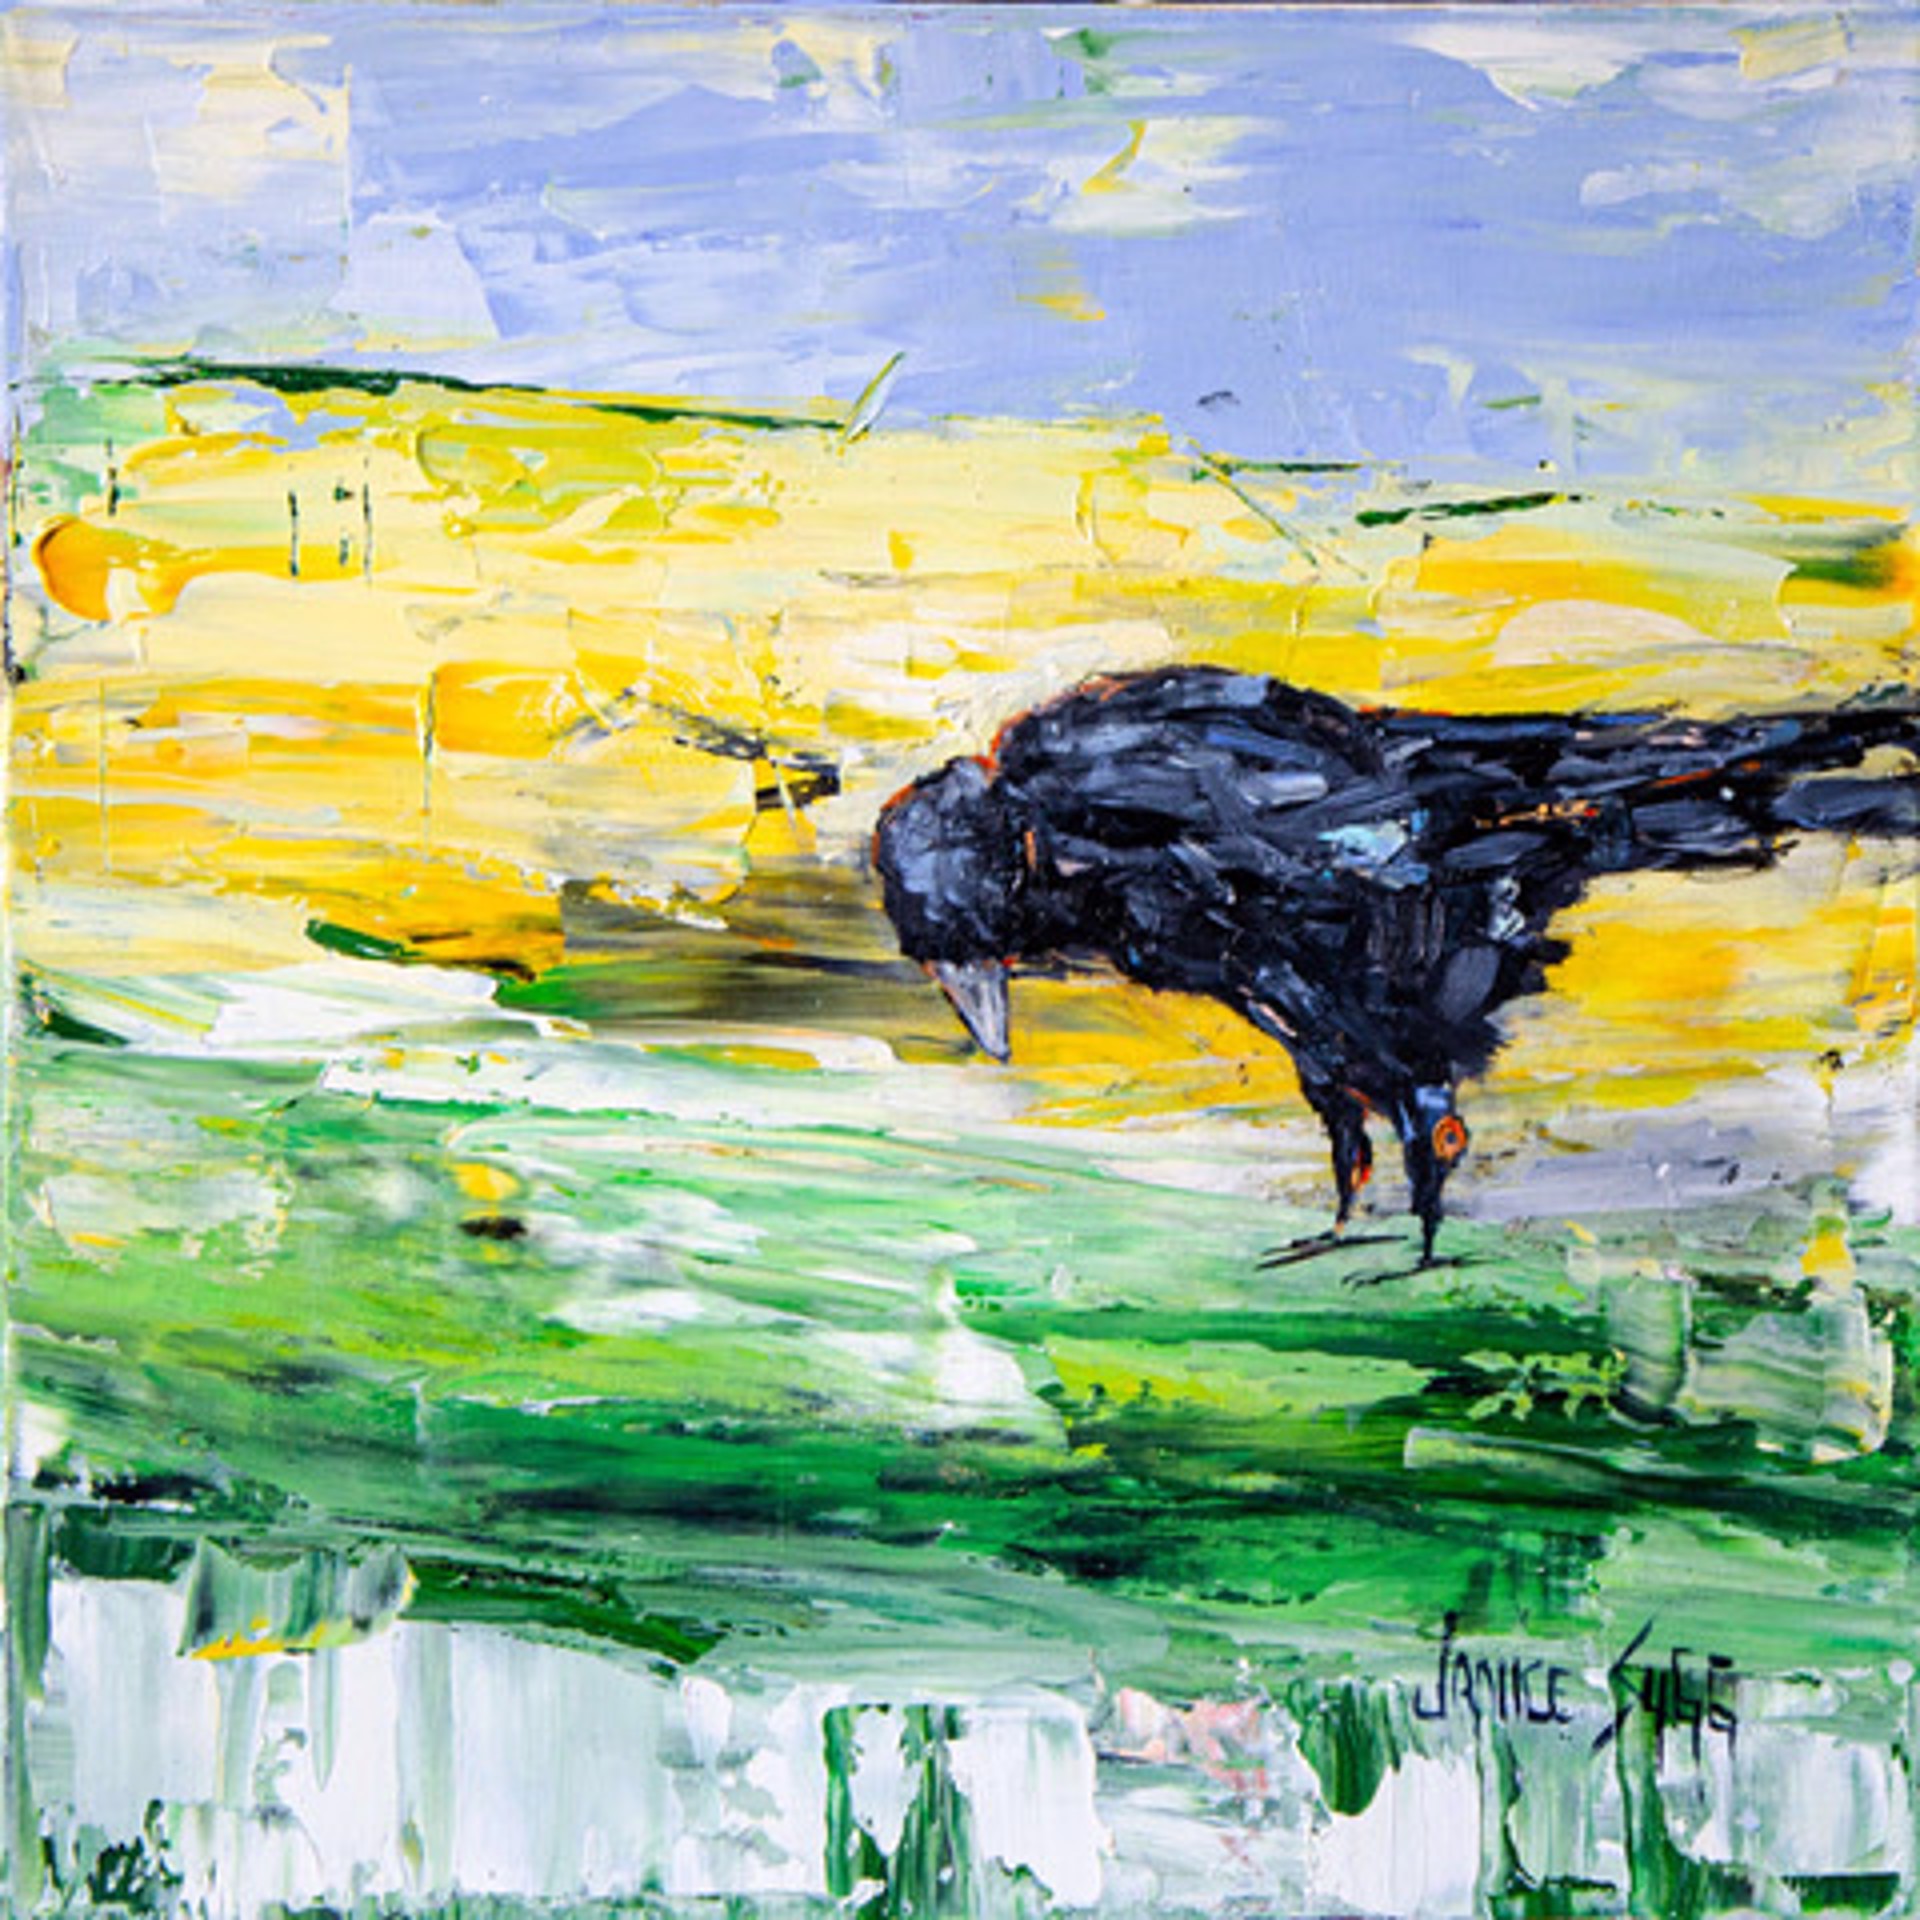 Black Crow, Green Meadow by Janice SUGG